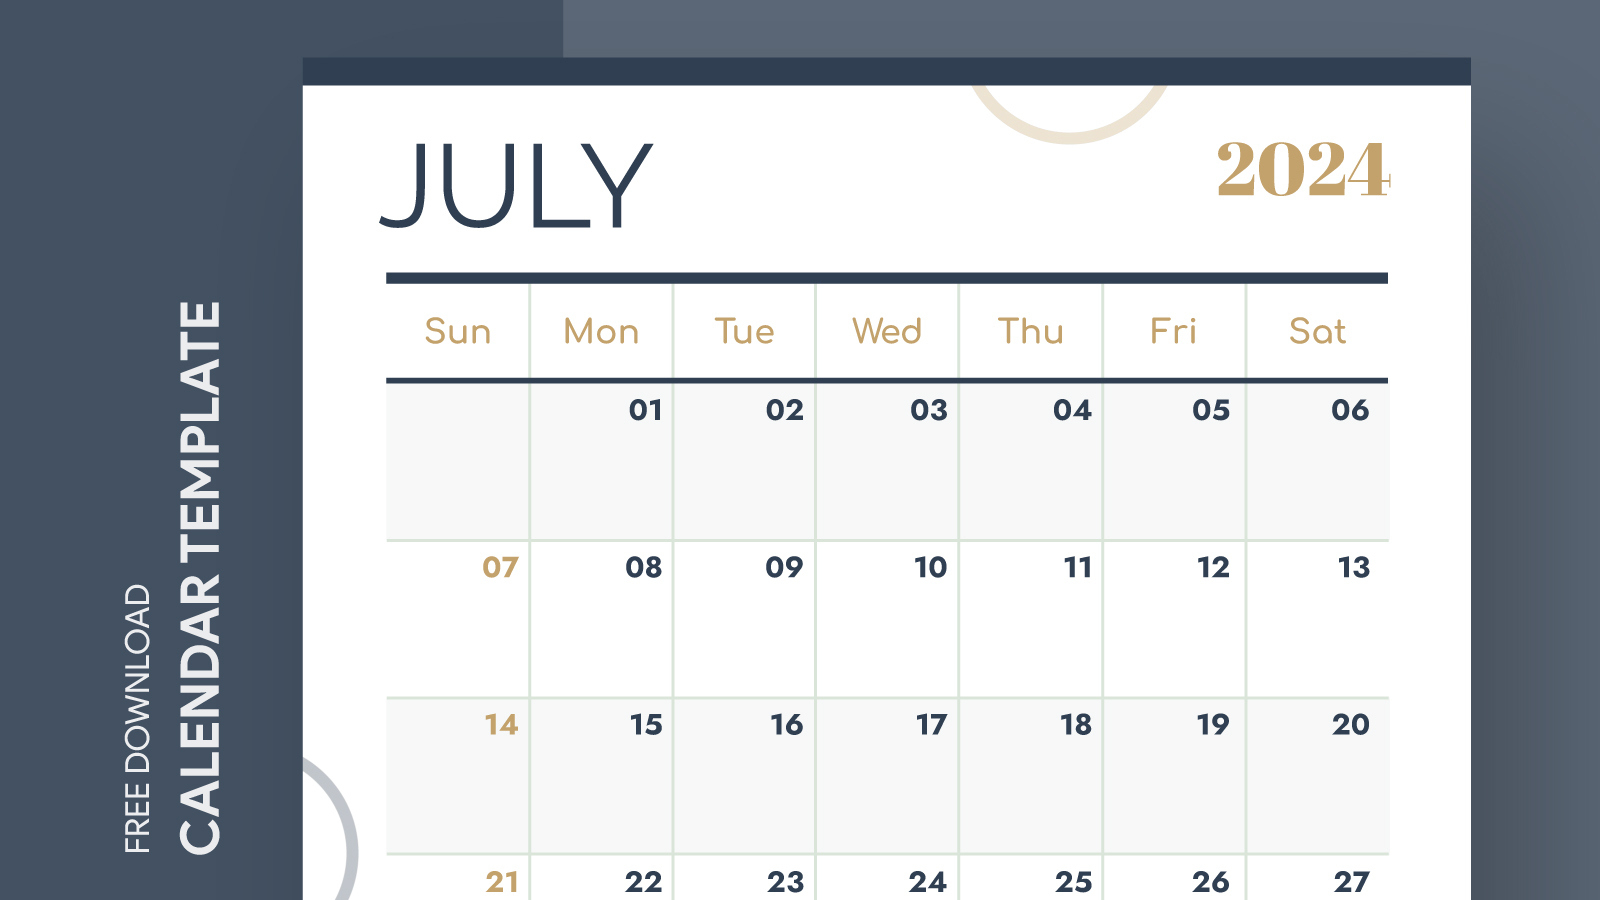 July 2024 Calendar Free Google Docs Template - Gdoc.io | Calendar 2024